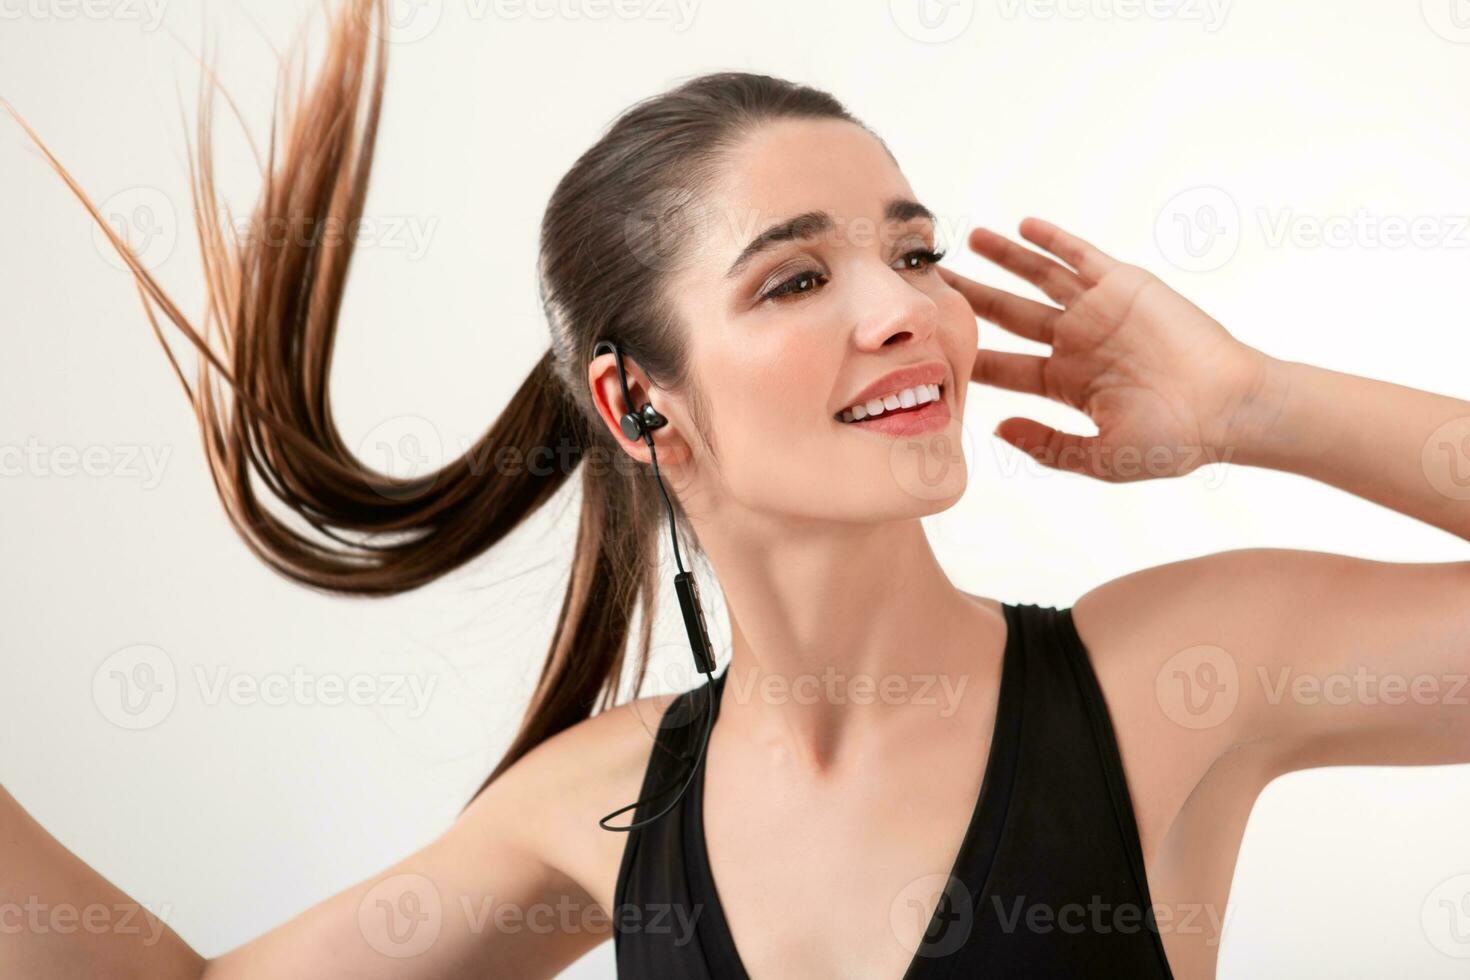 attractive woman in jogging black top listening to music on earphones photo